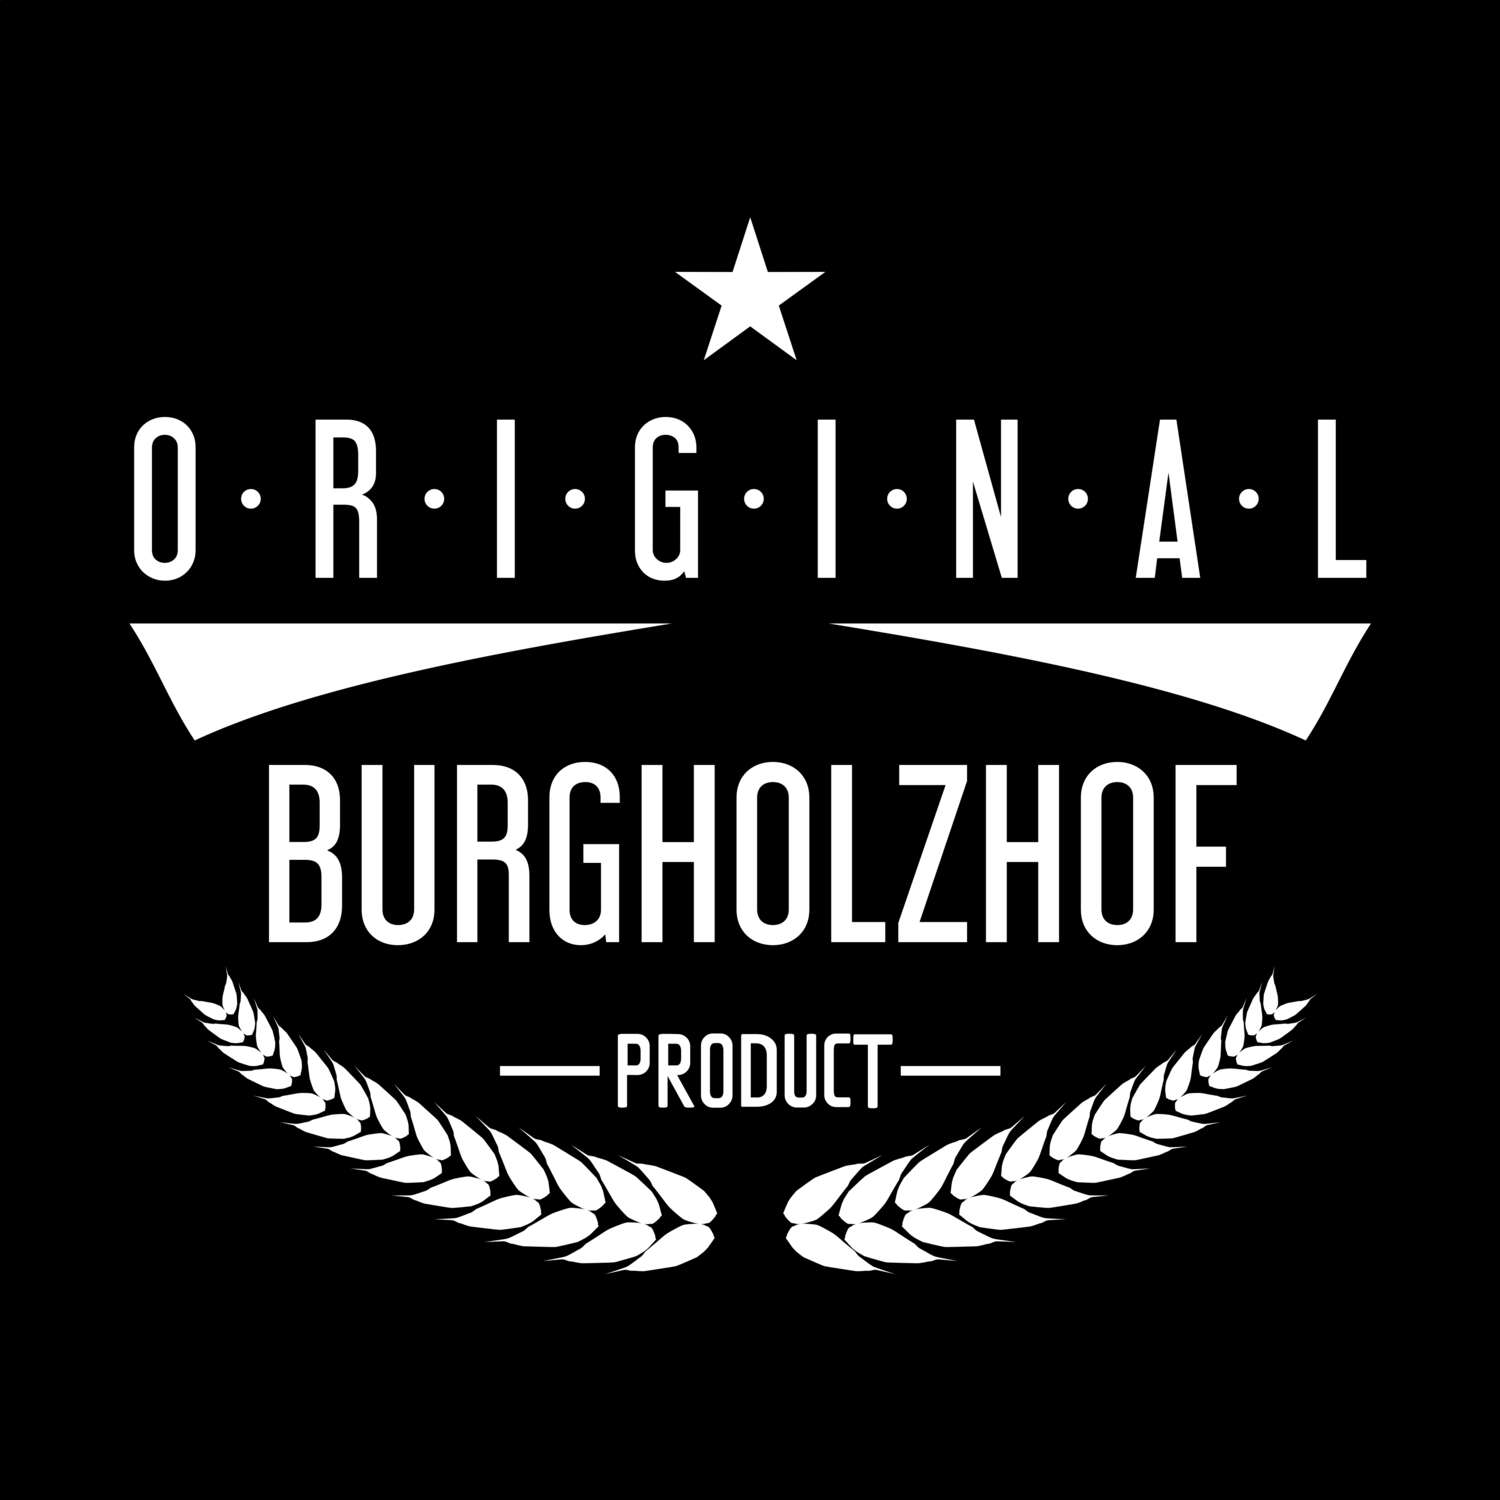 Burgholzhof T-Shirt »Original Product«